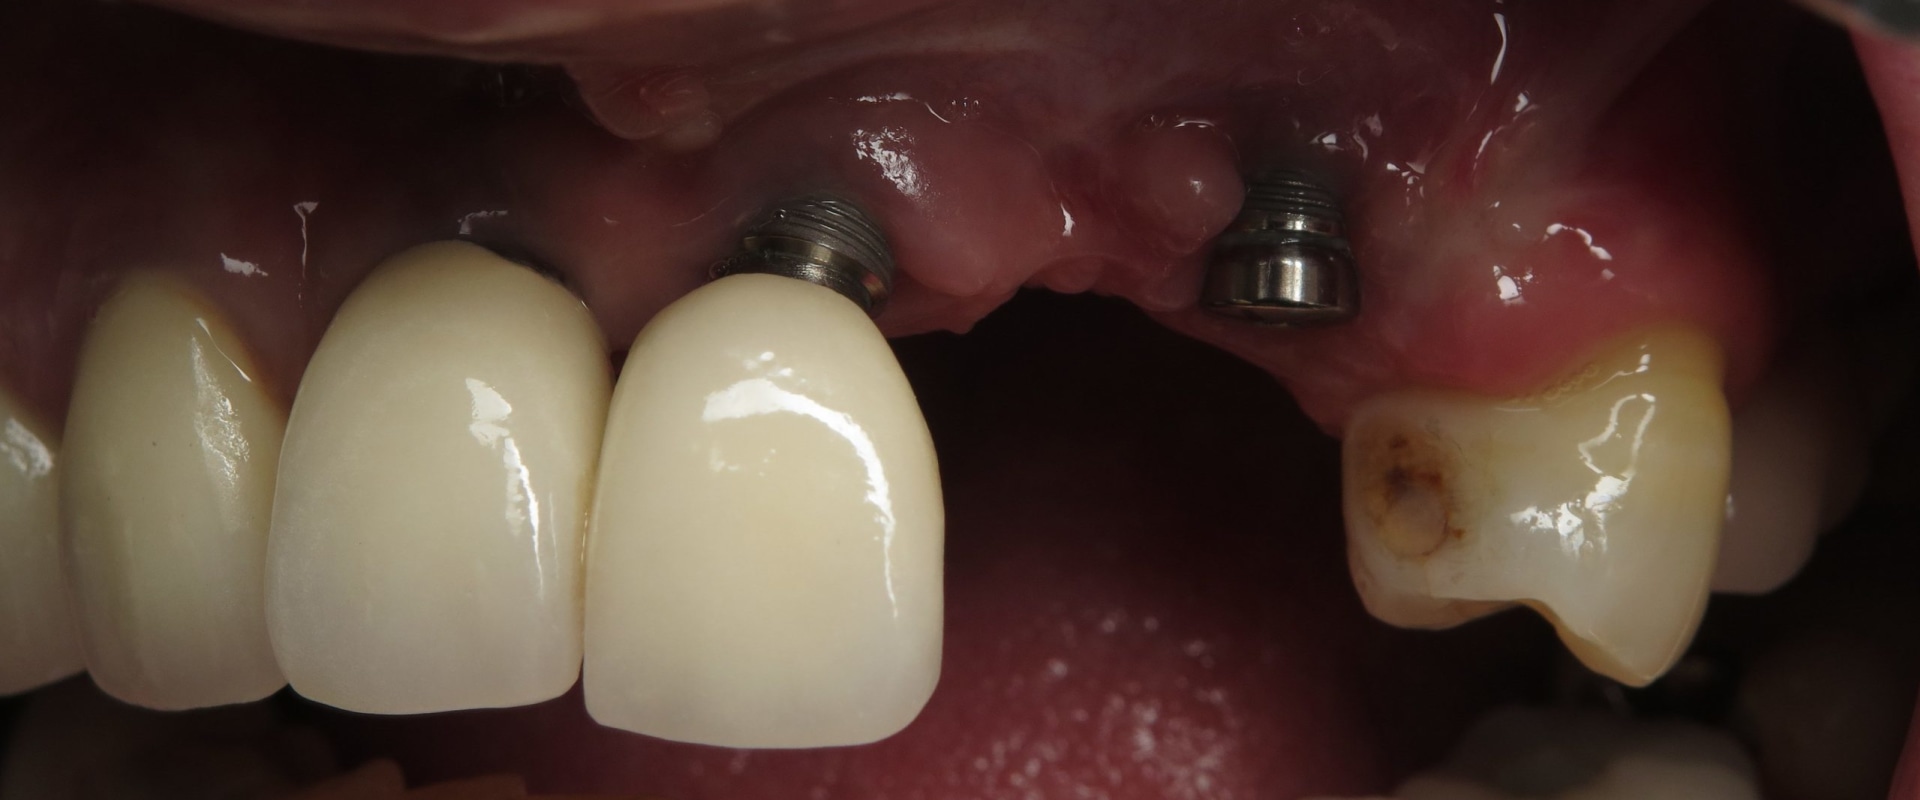 Can a failed dental implant be saved?